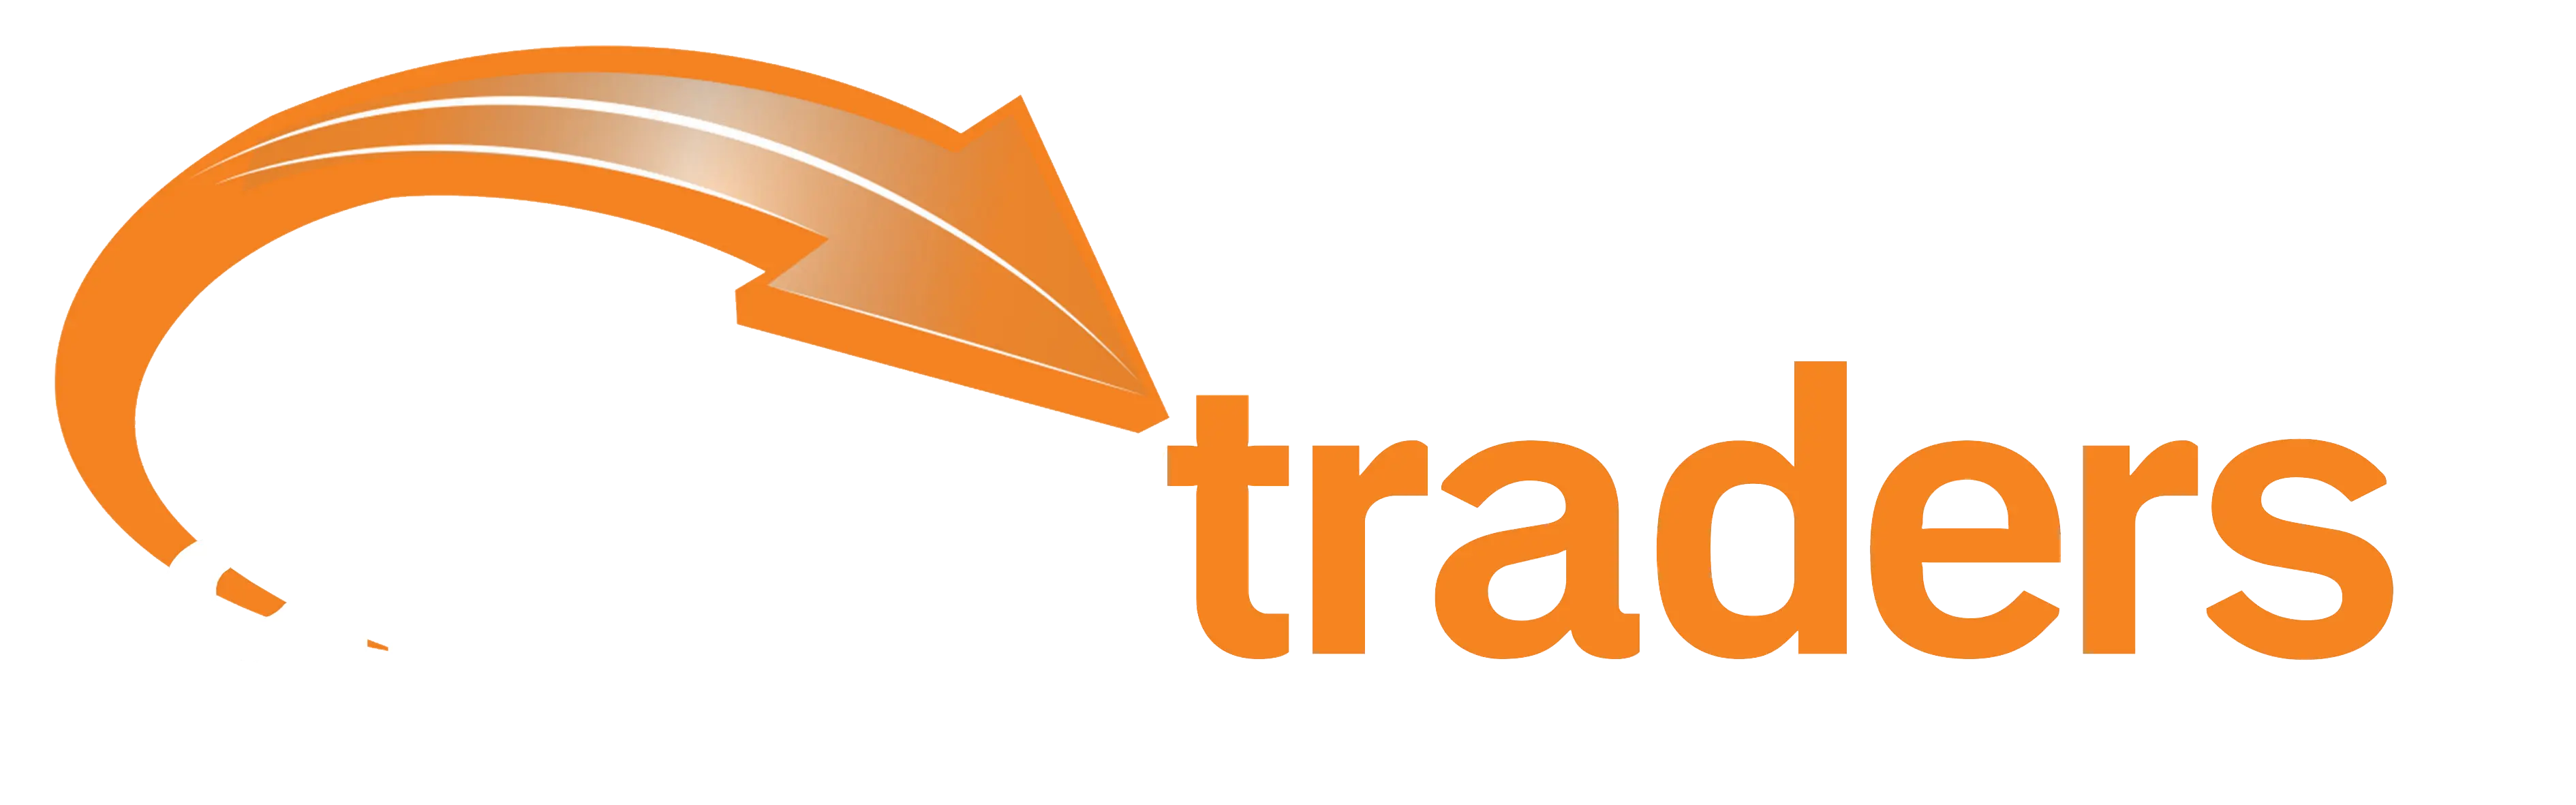 Arrow Traders Pty Ltd Logo